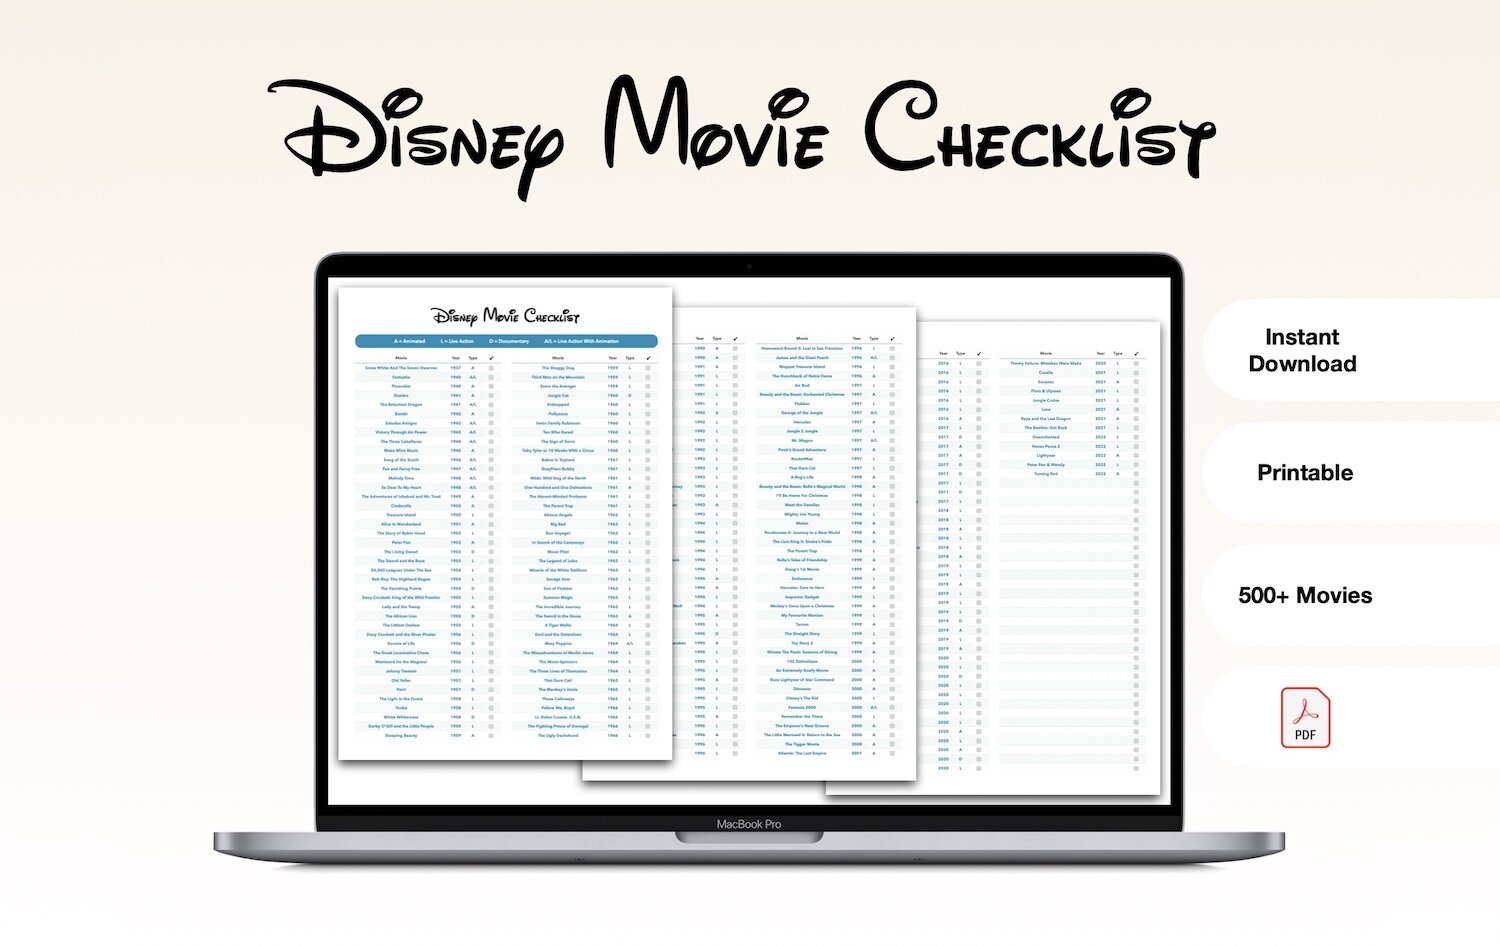 Disney Movie Checklist - $4.99